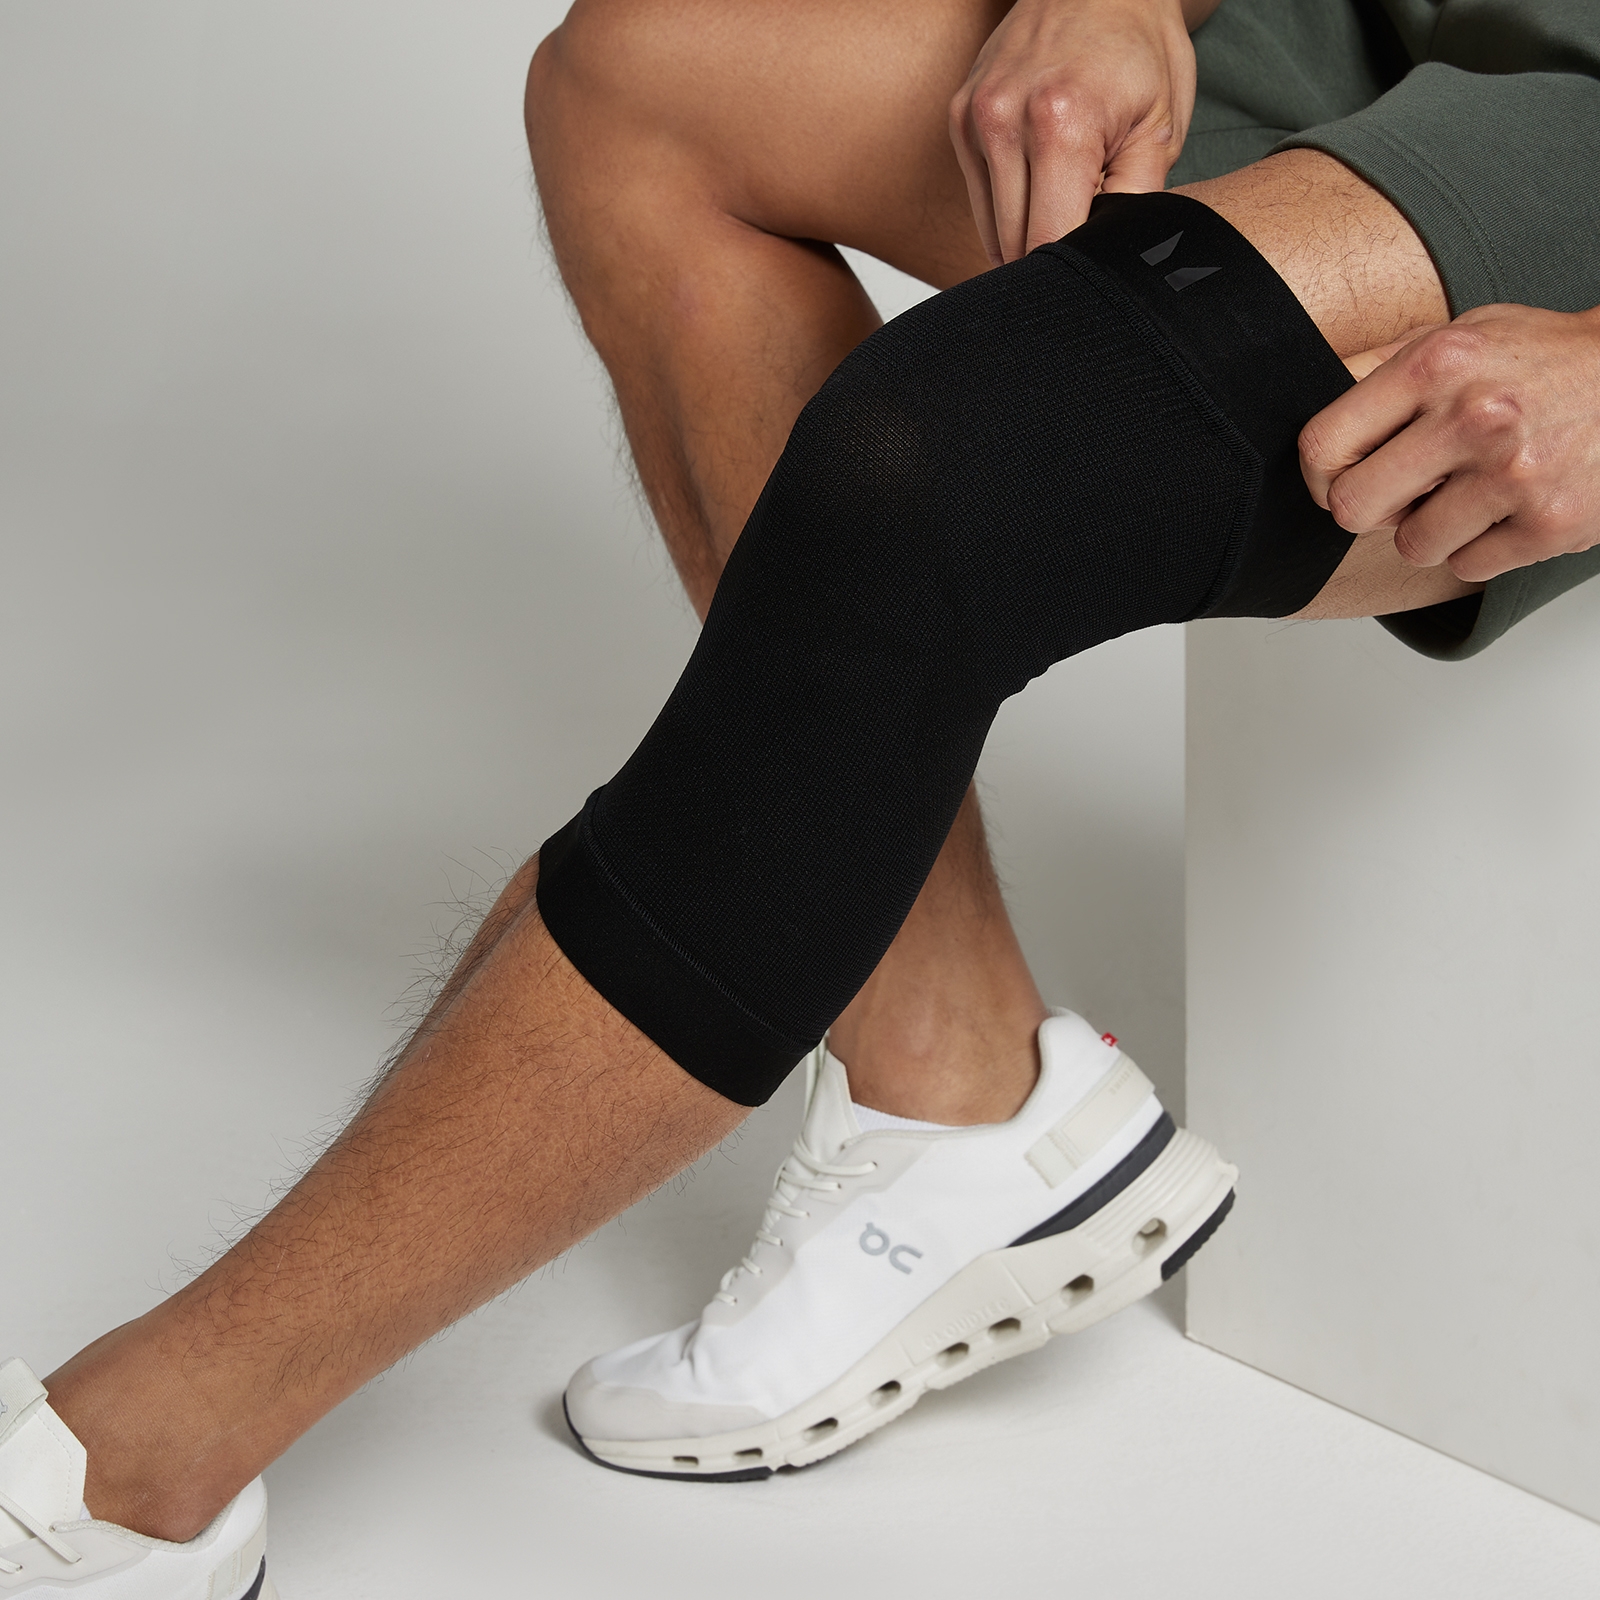 E-shop Bezšvový návlek na koleno MP (jeden) – čierny - M